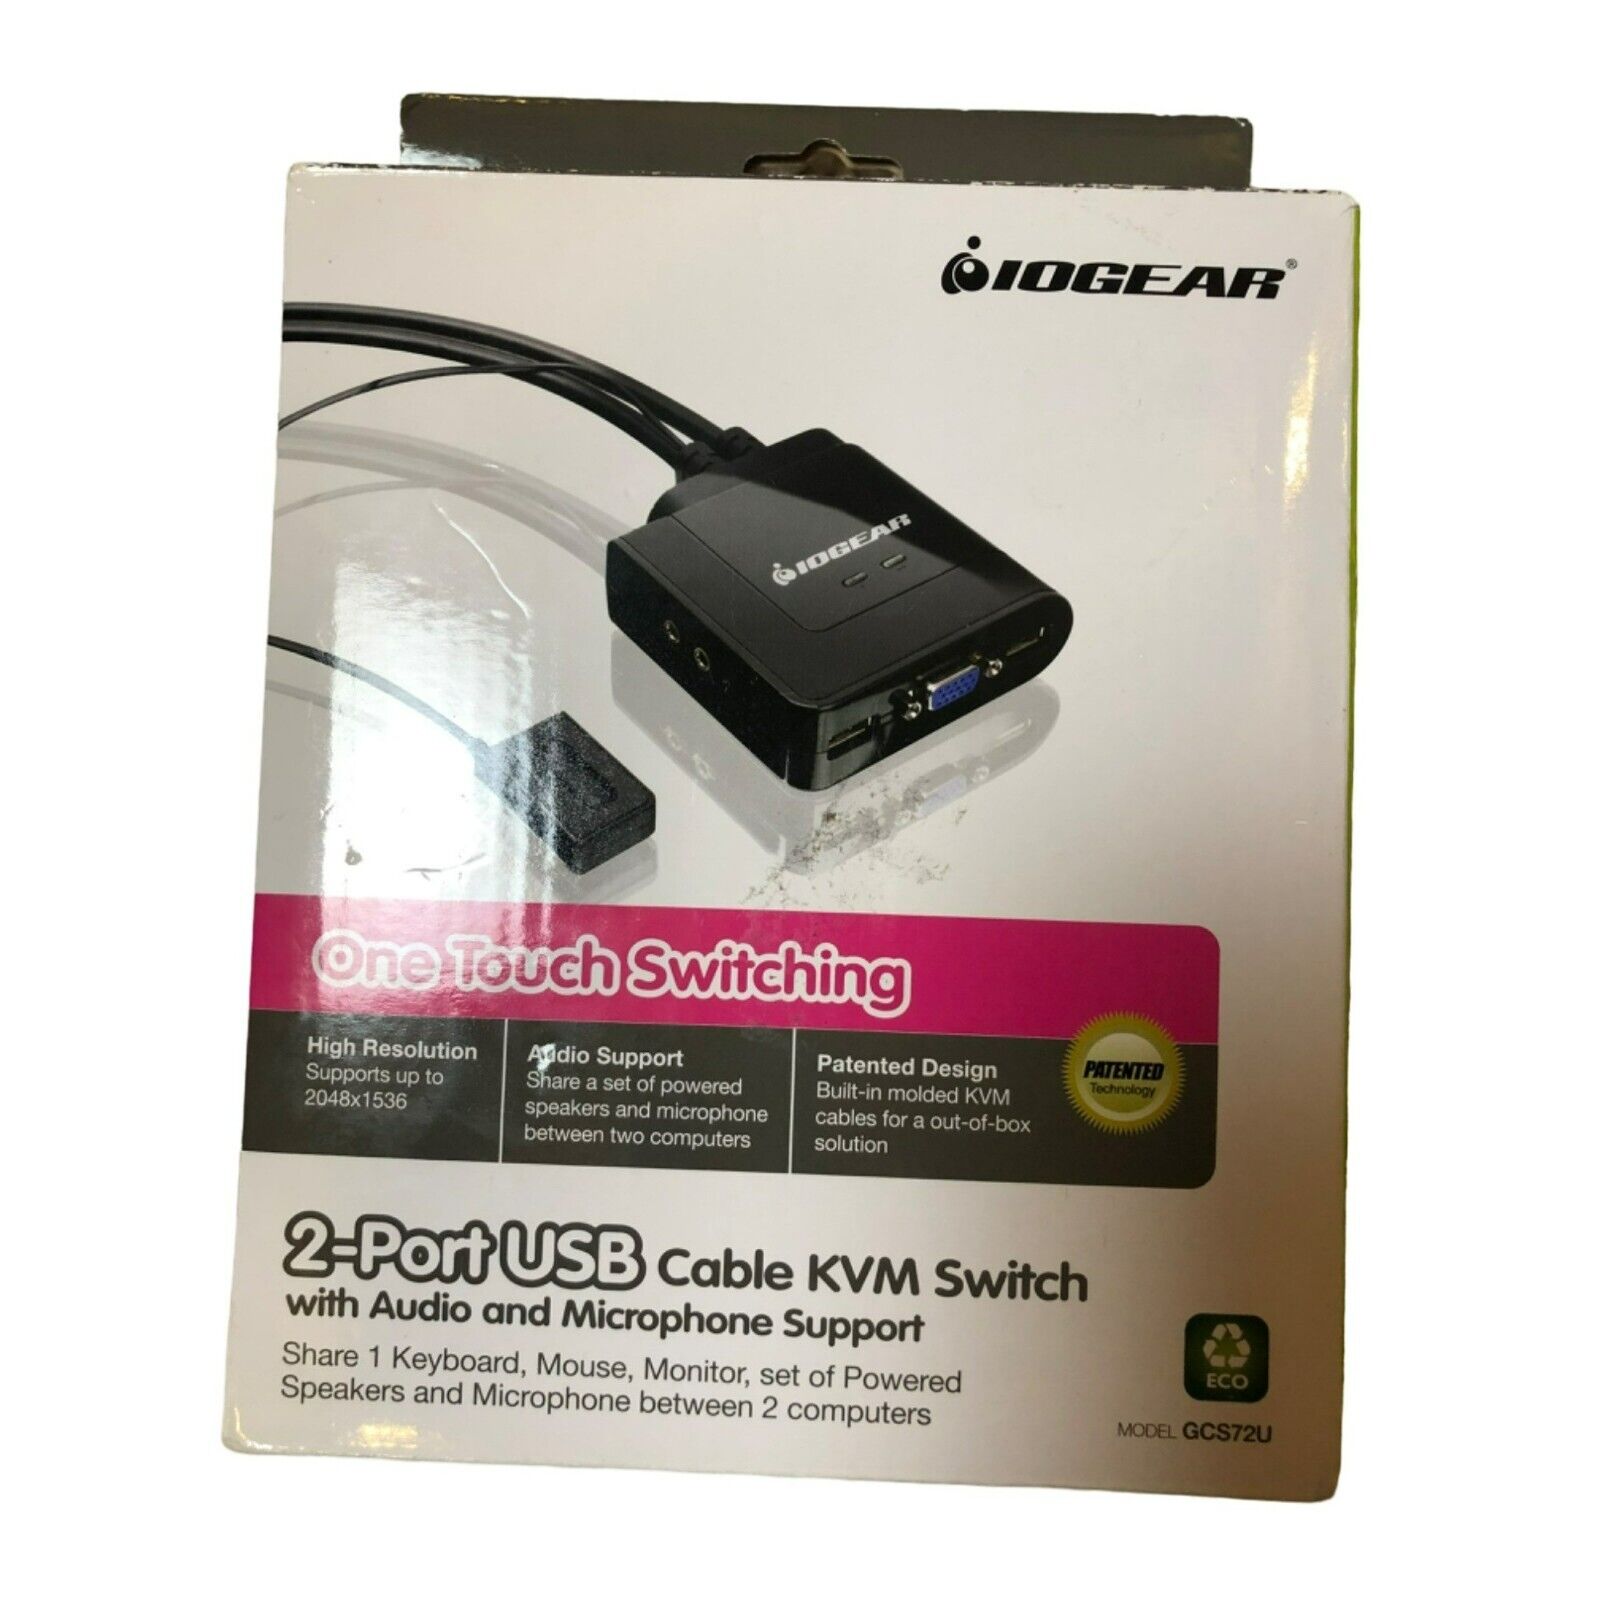 NIB Iogear GCS72U 2-Port USB Cable KVM Switch One Touch Switching